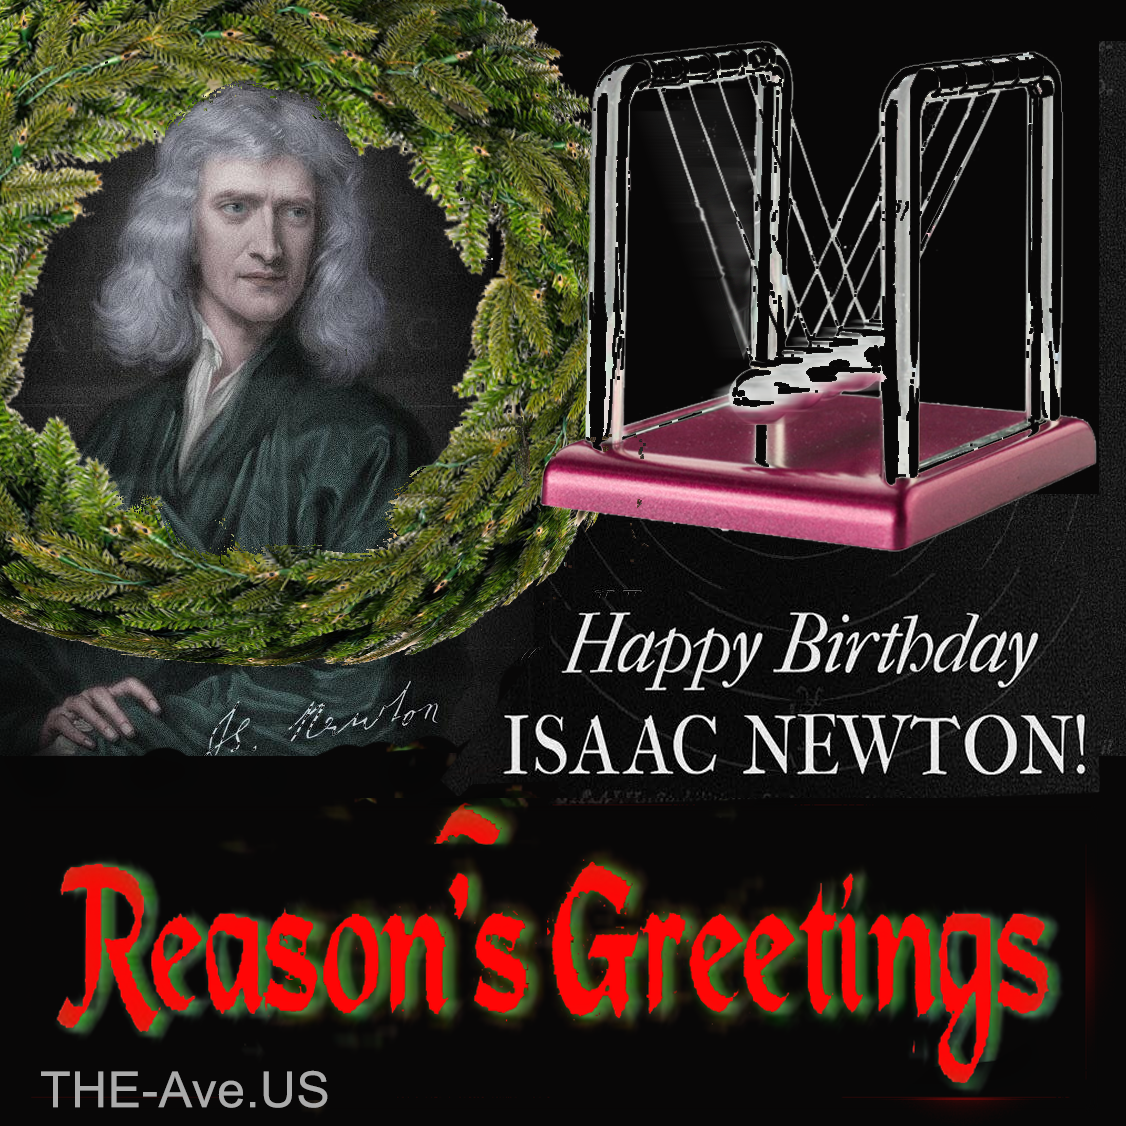 Newton Birthday Christmas Reason's Greetings Tags!